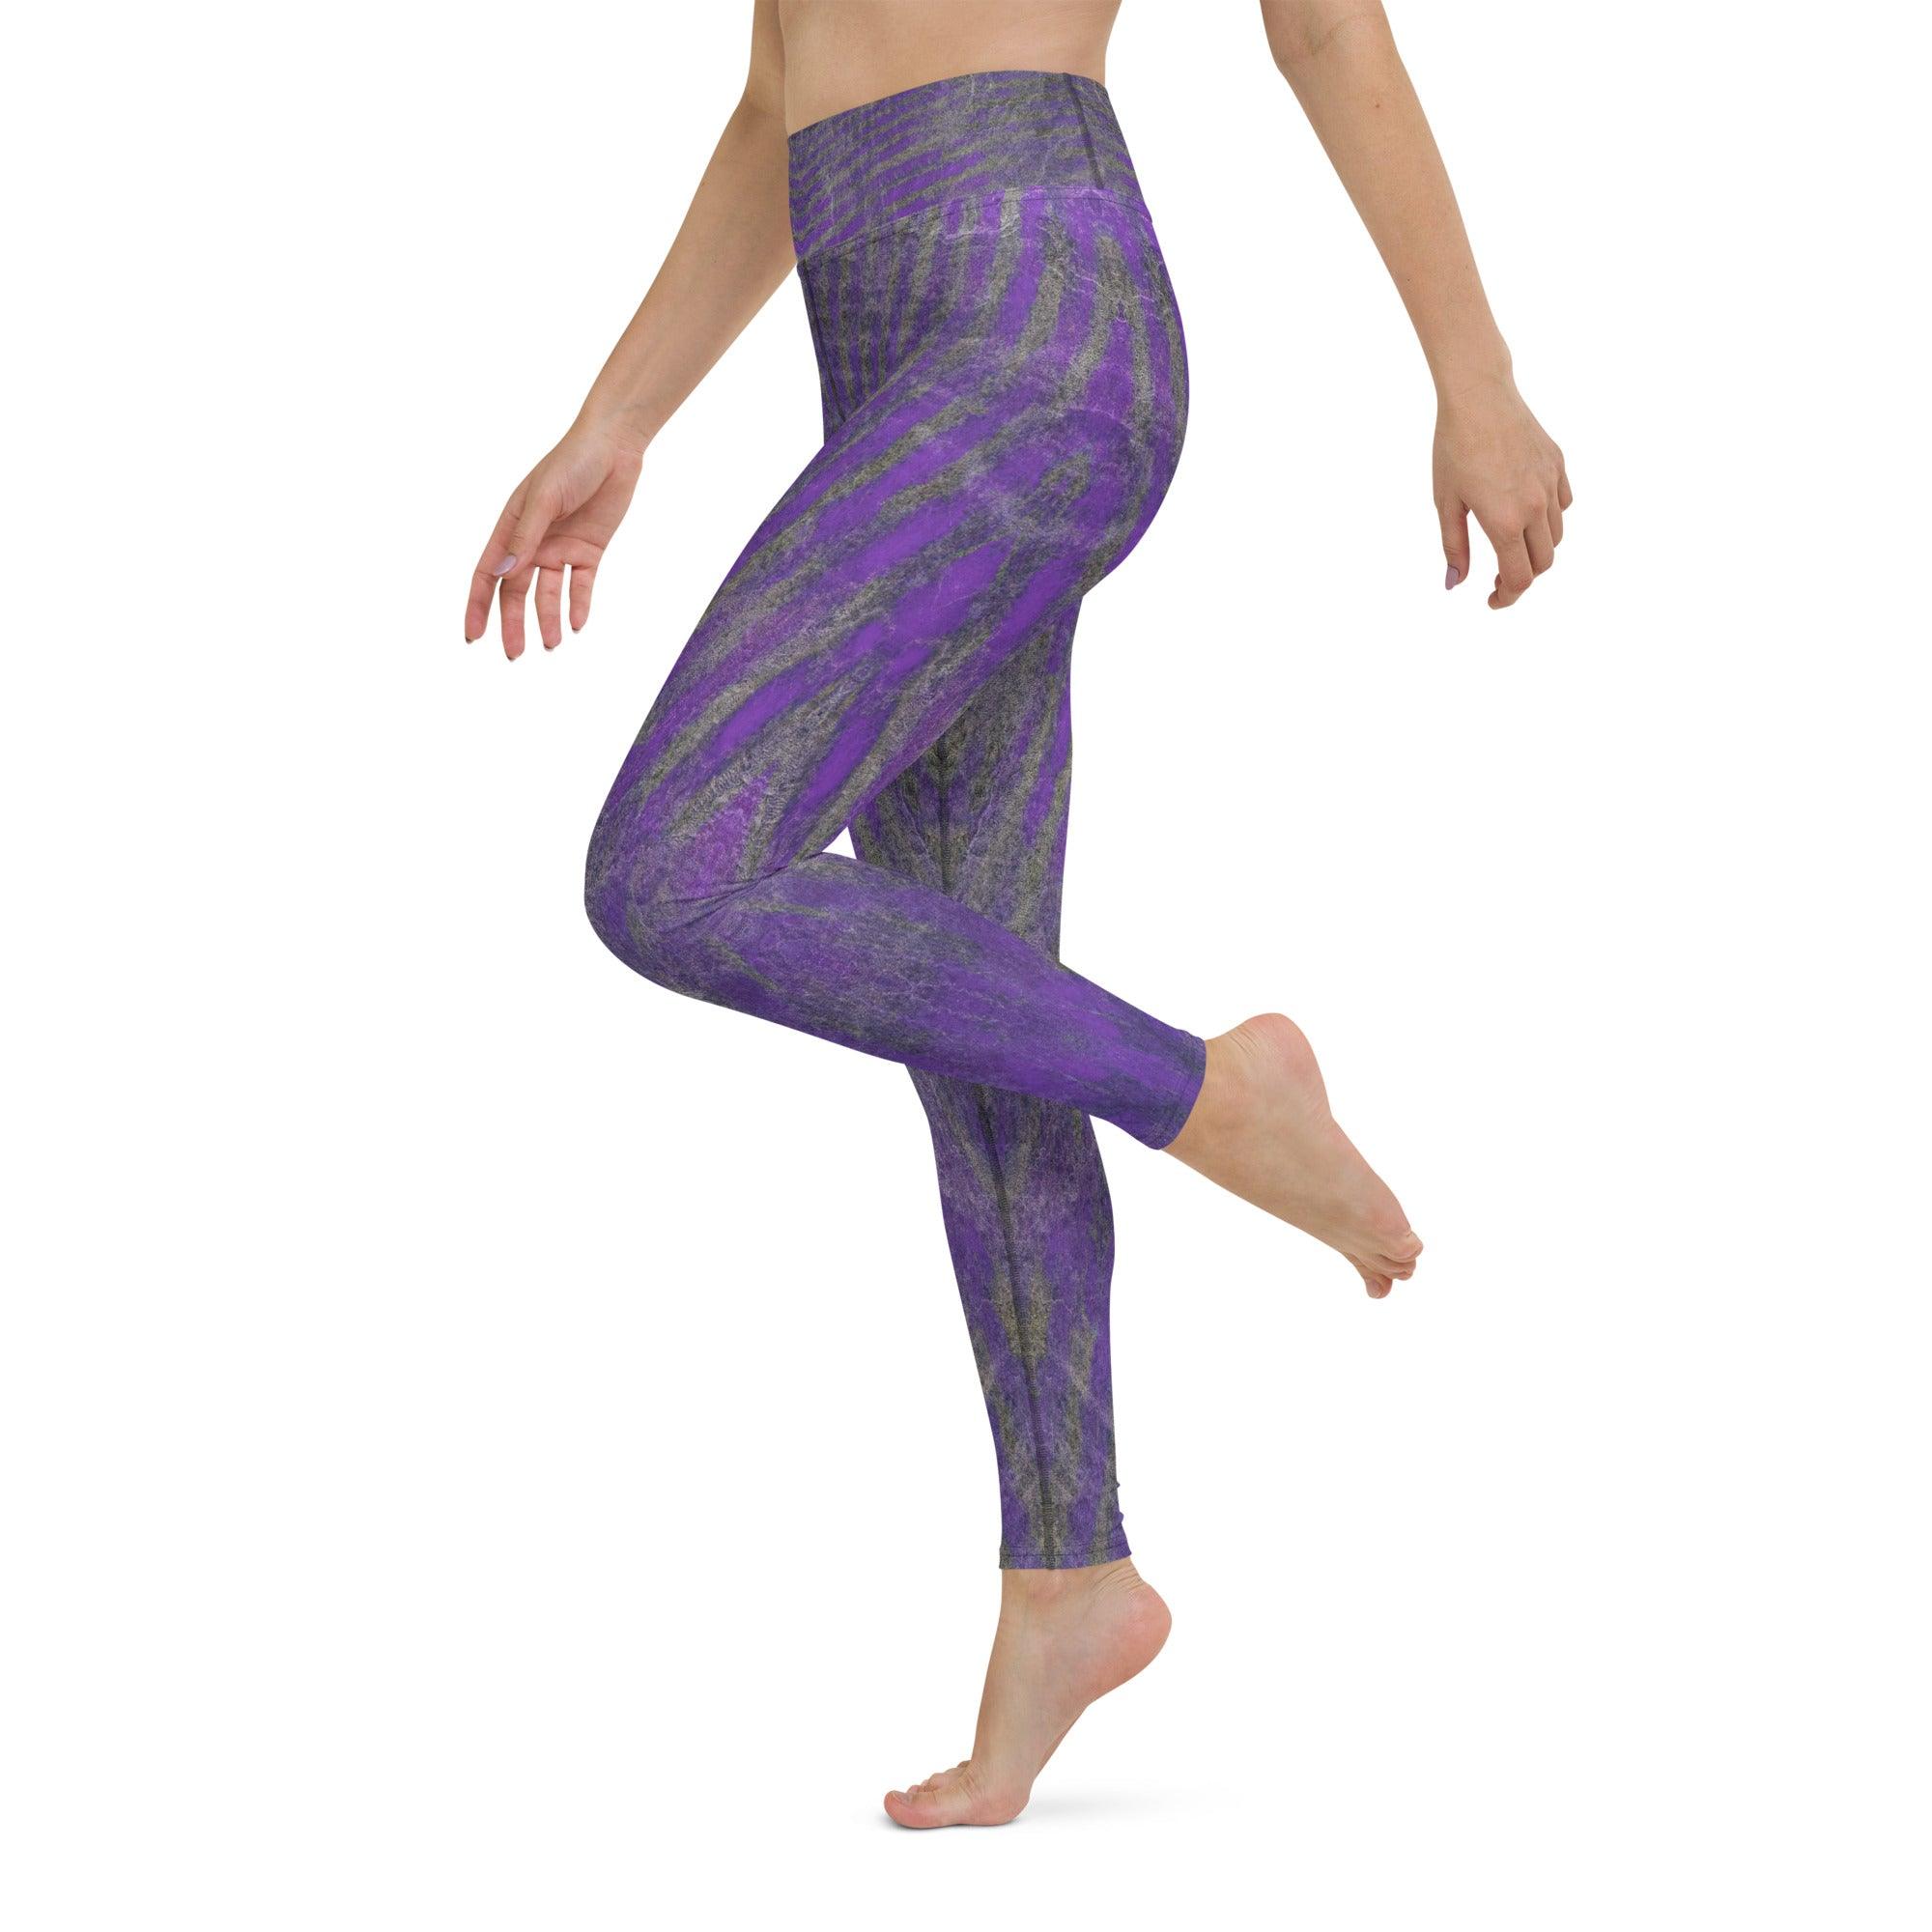 Purple Yoga Leggings product detail shot.